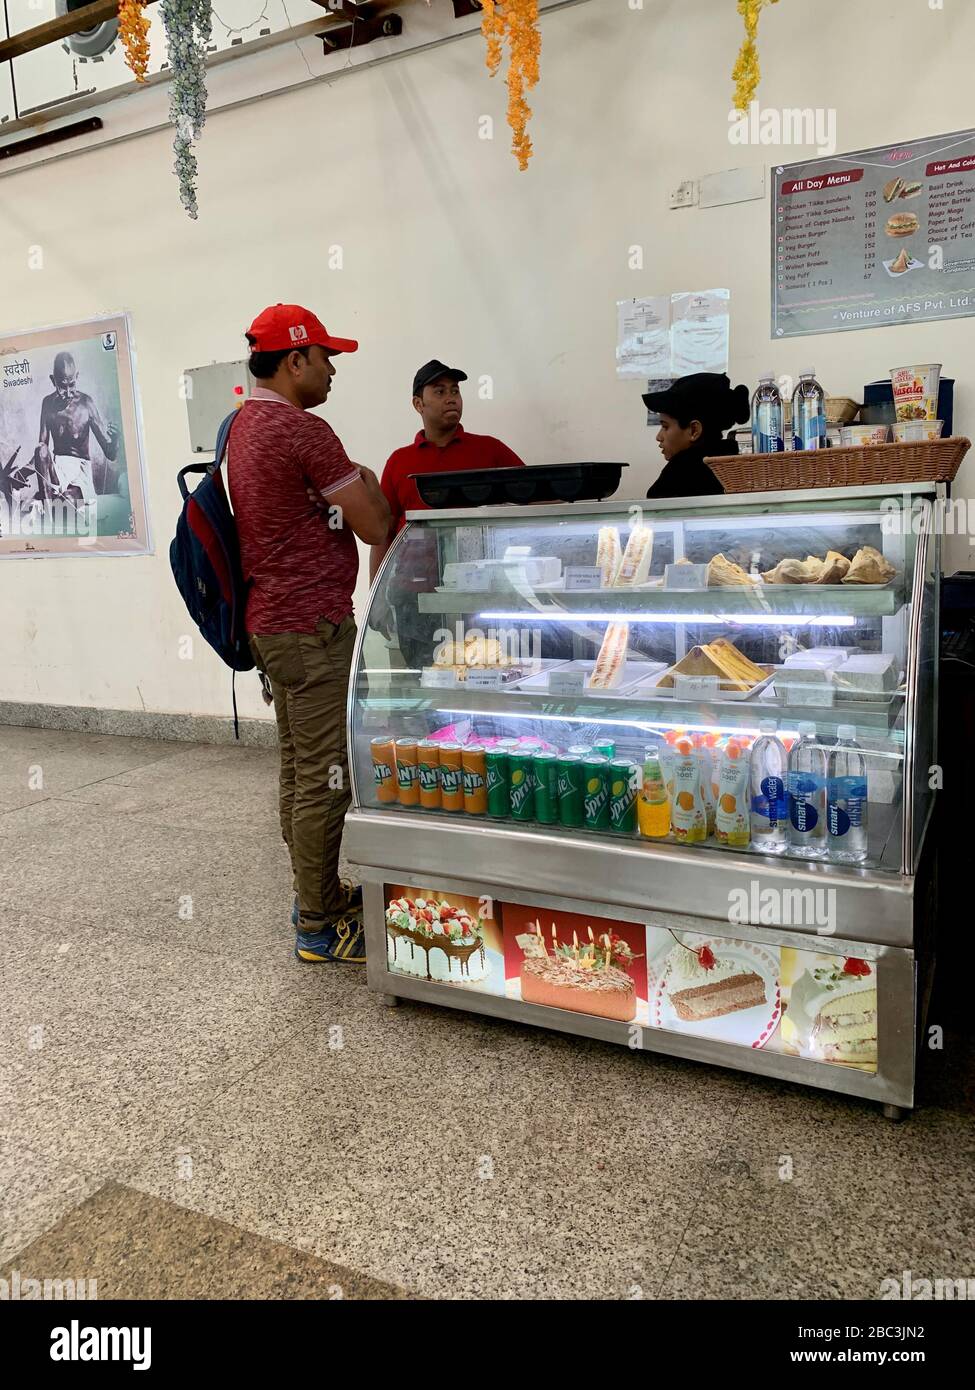 Food vendor at airport Stock Photo